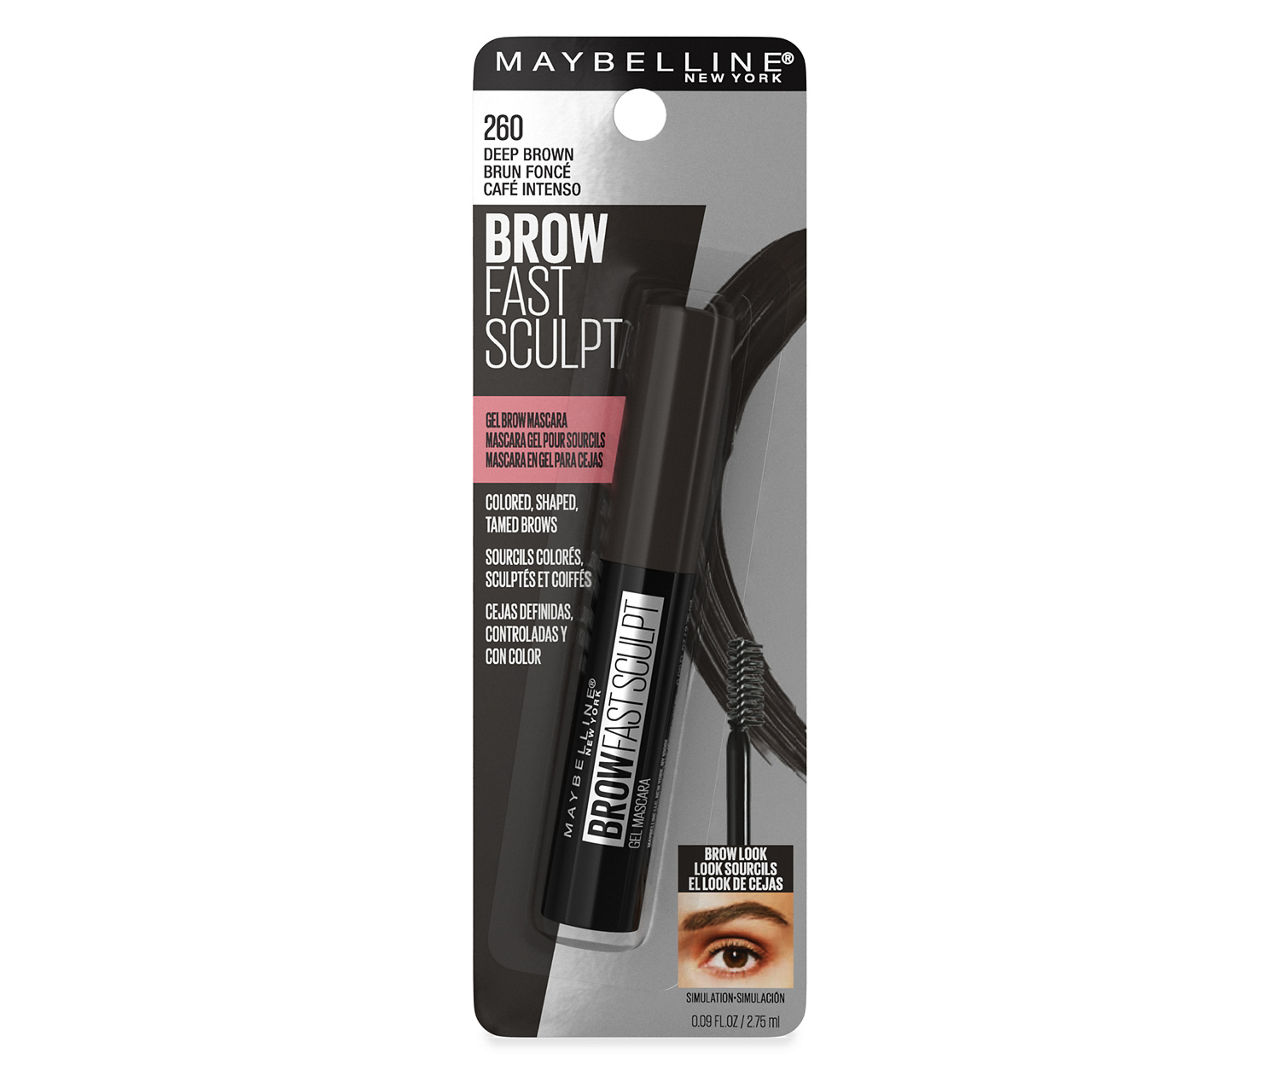 Maybelline Brow Fast Sculpt, Shapes Eyebrows, Eyebrow Mascara Makeup, Deep Brown, 0.09 fl. oz.